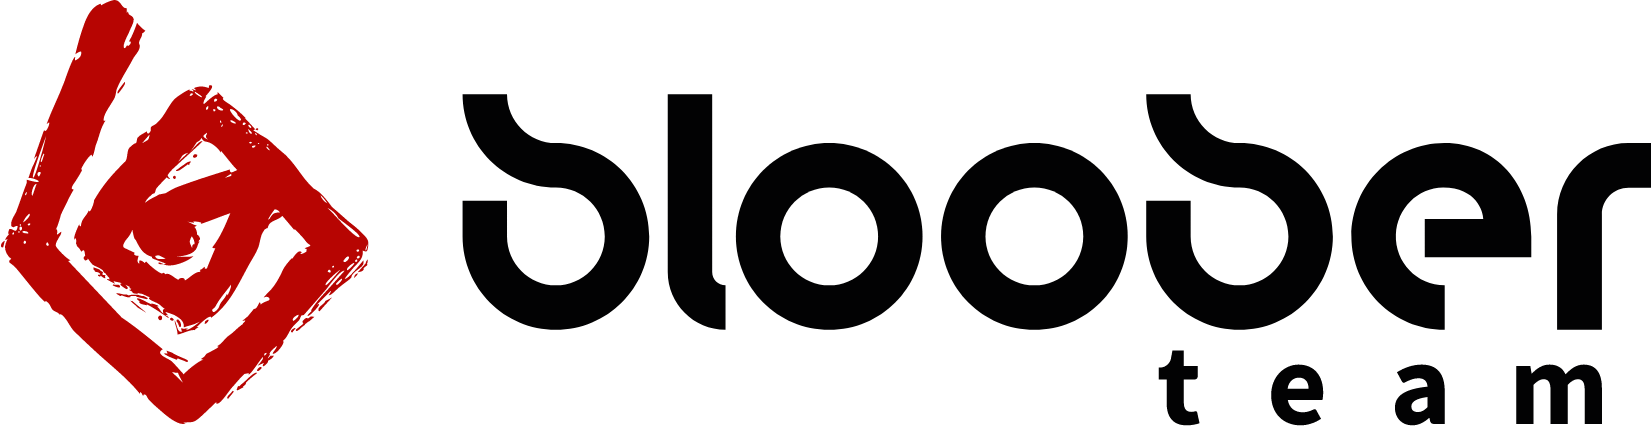 Bloober Team logo large (transparent PNG)